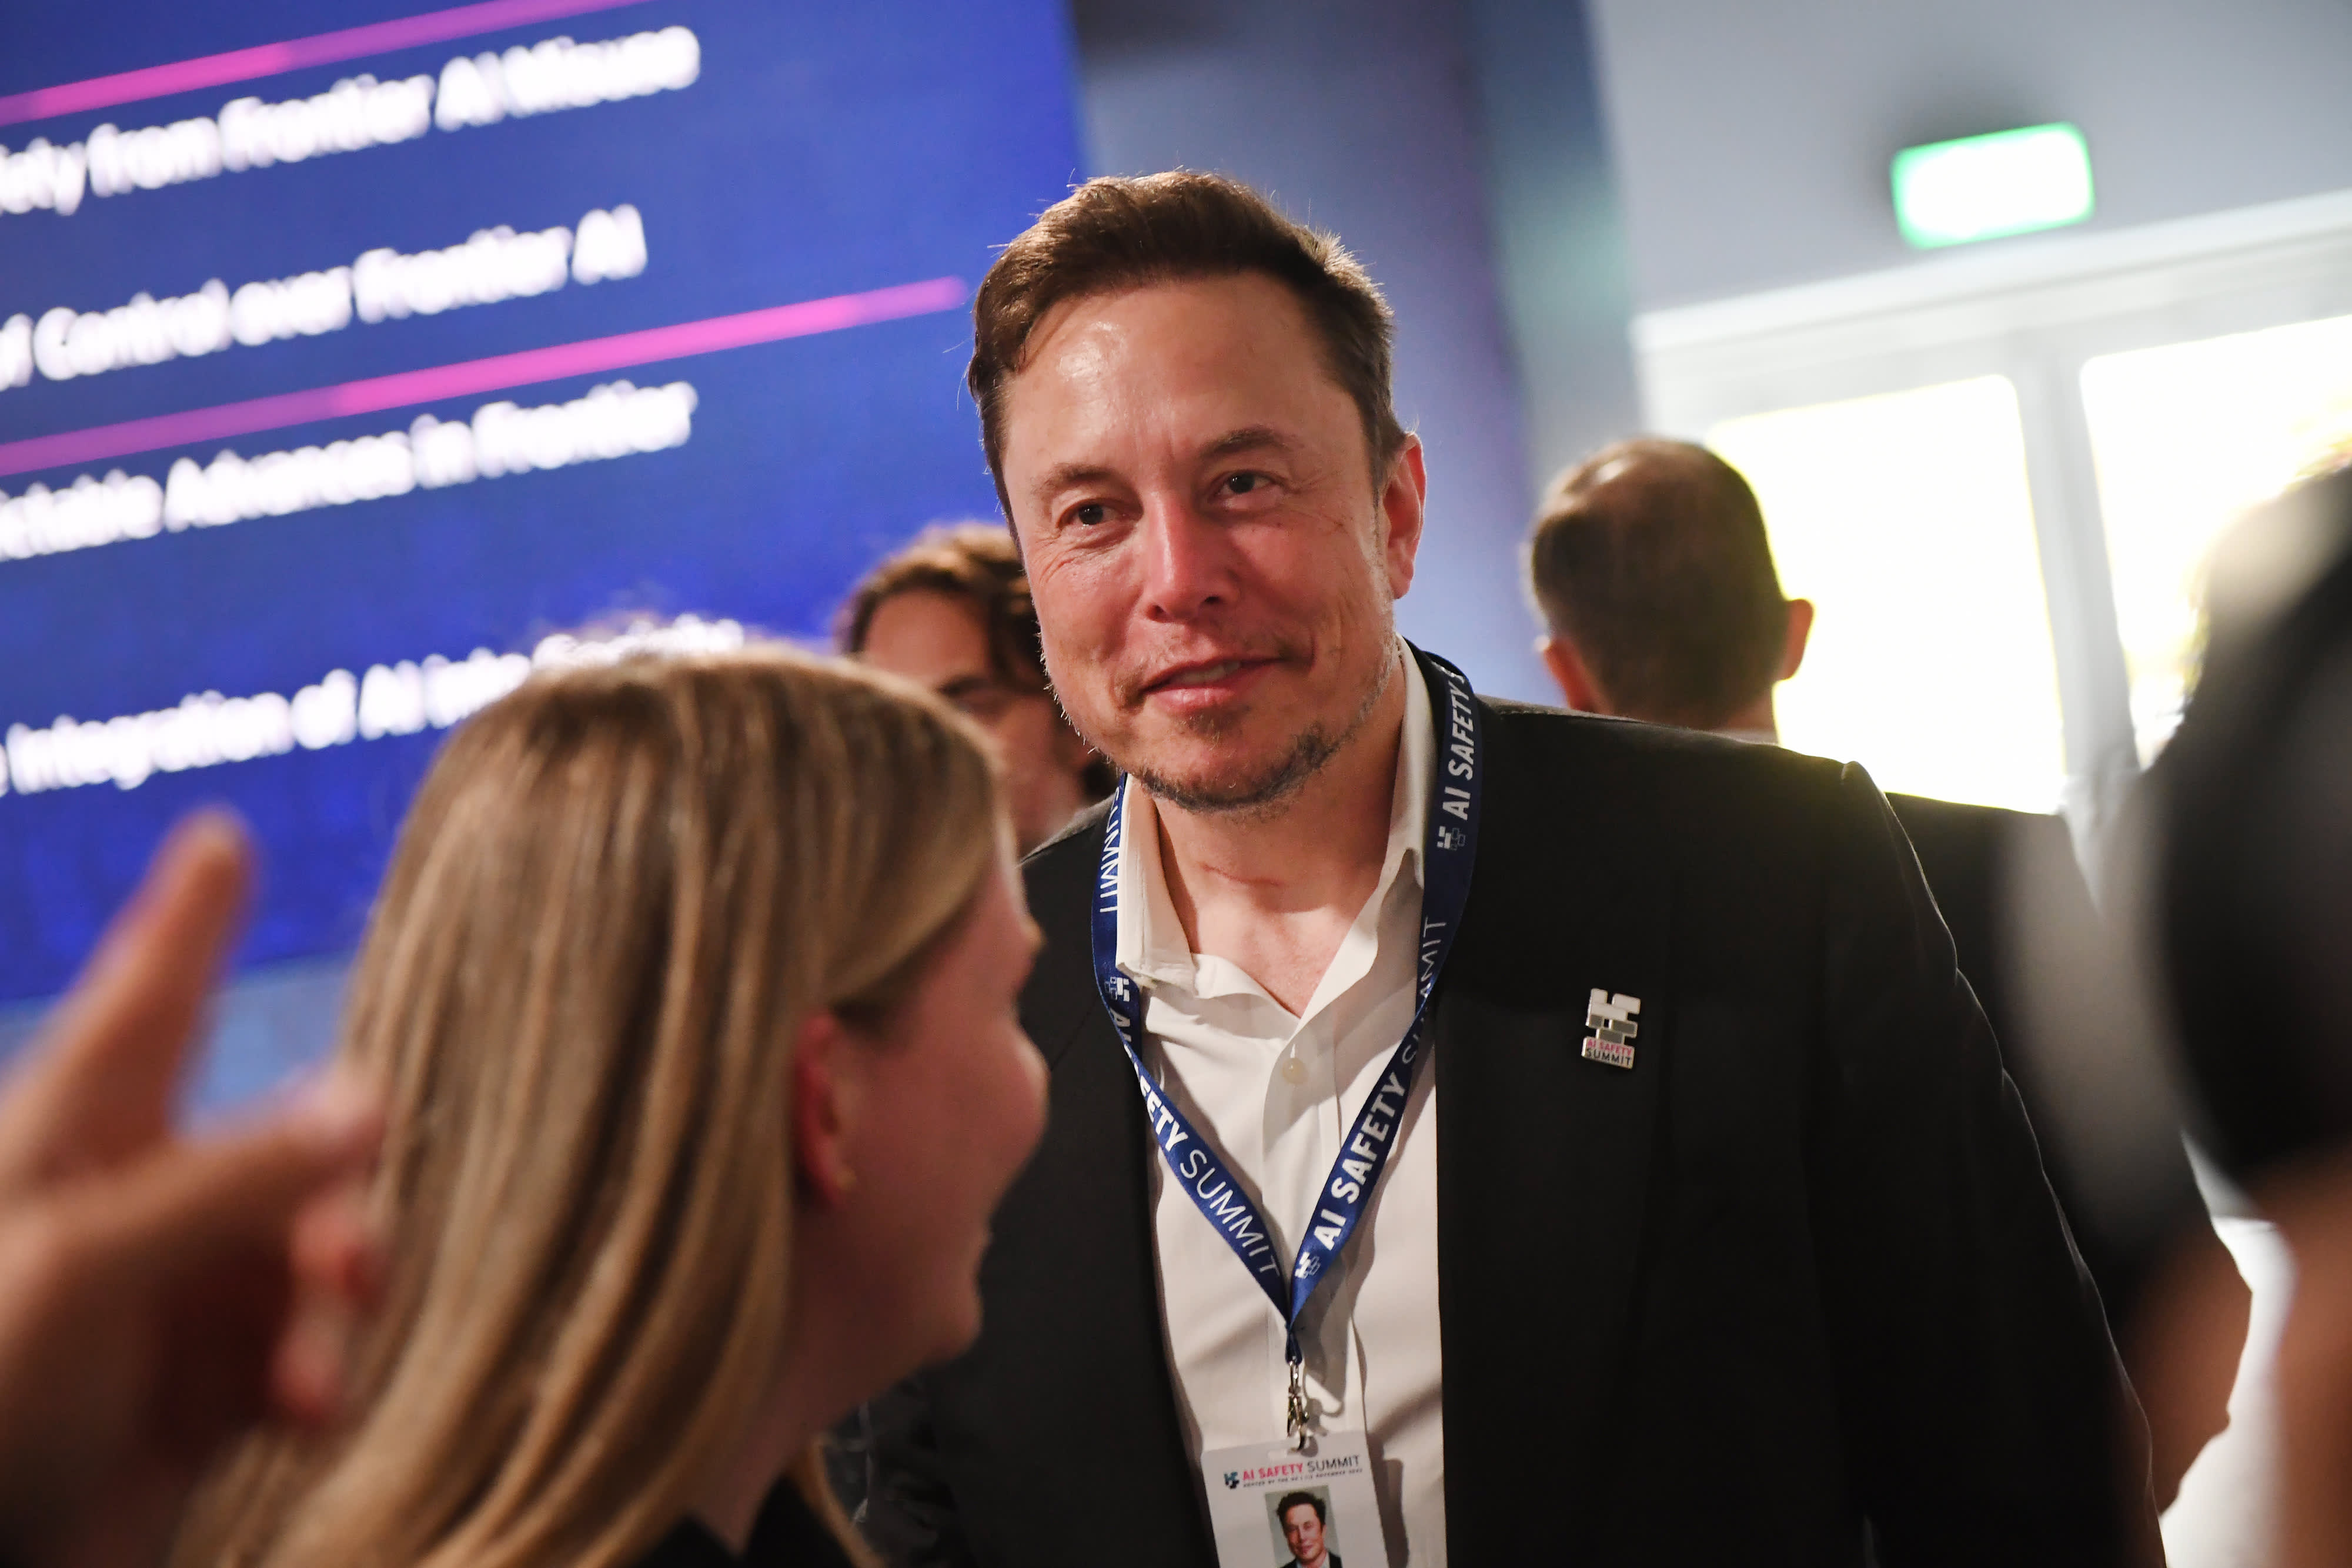 Tesla boss Elon Musk says AI will create situation where no job is needed